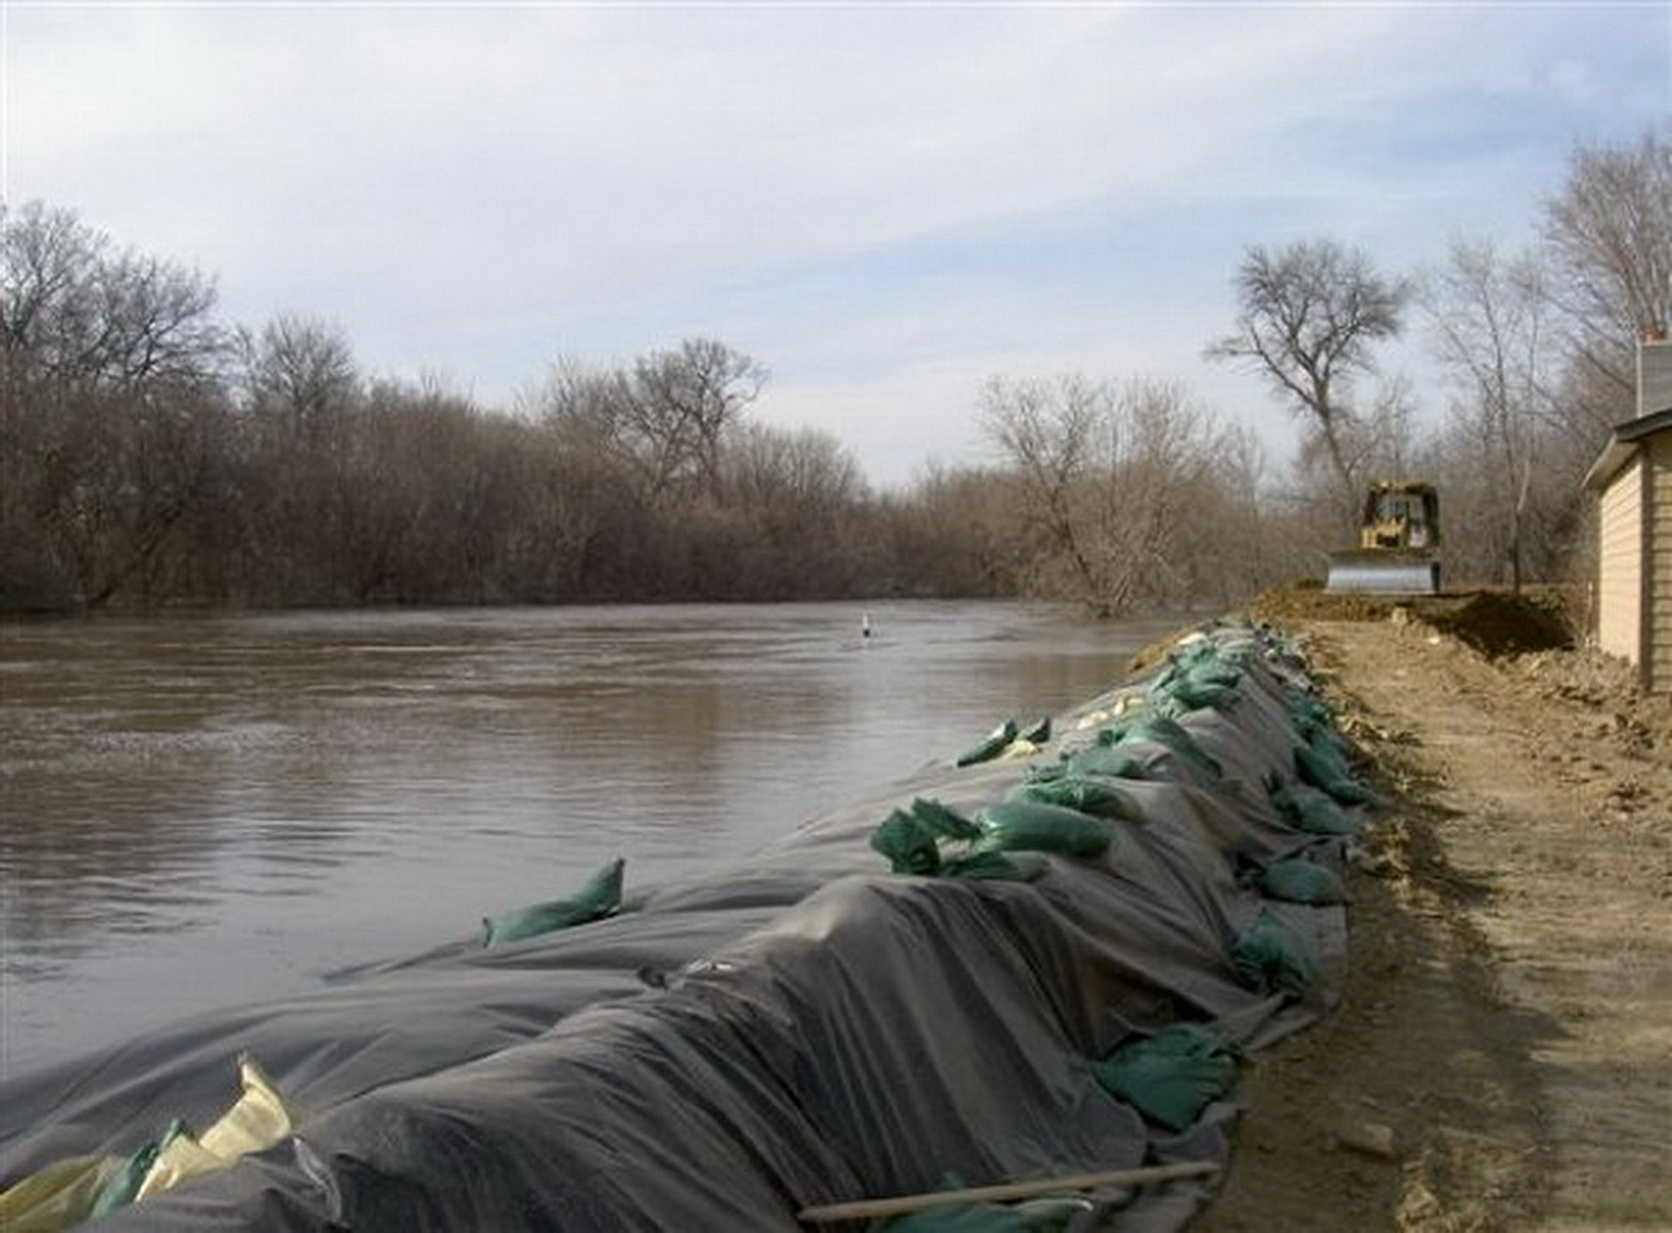 sandbags line up along the river bank